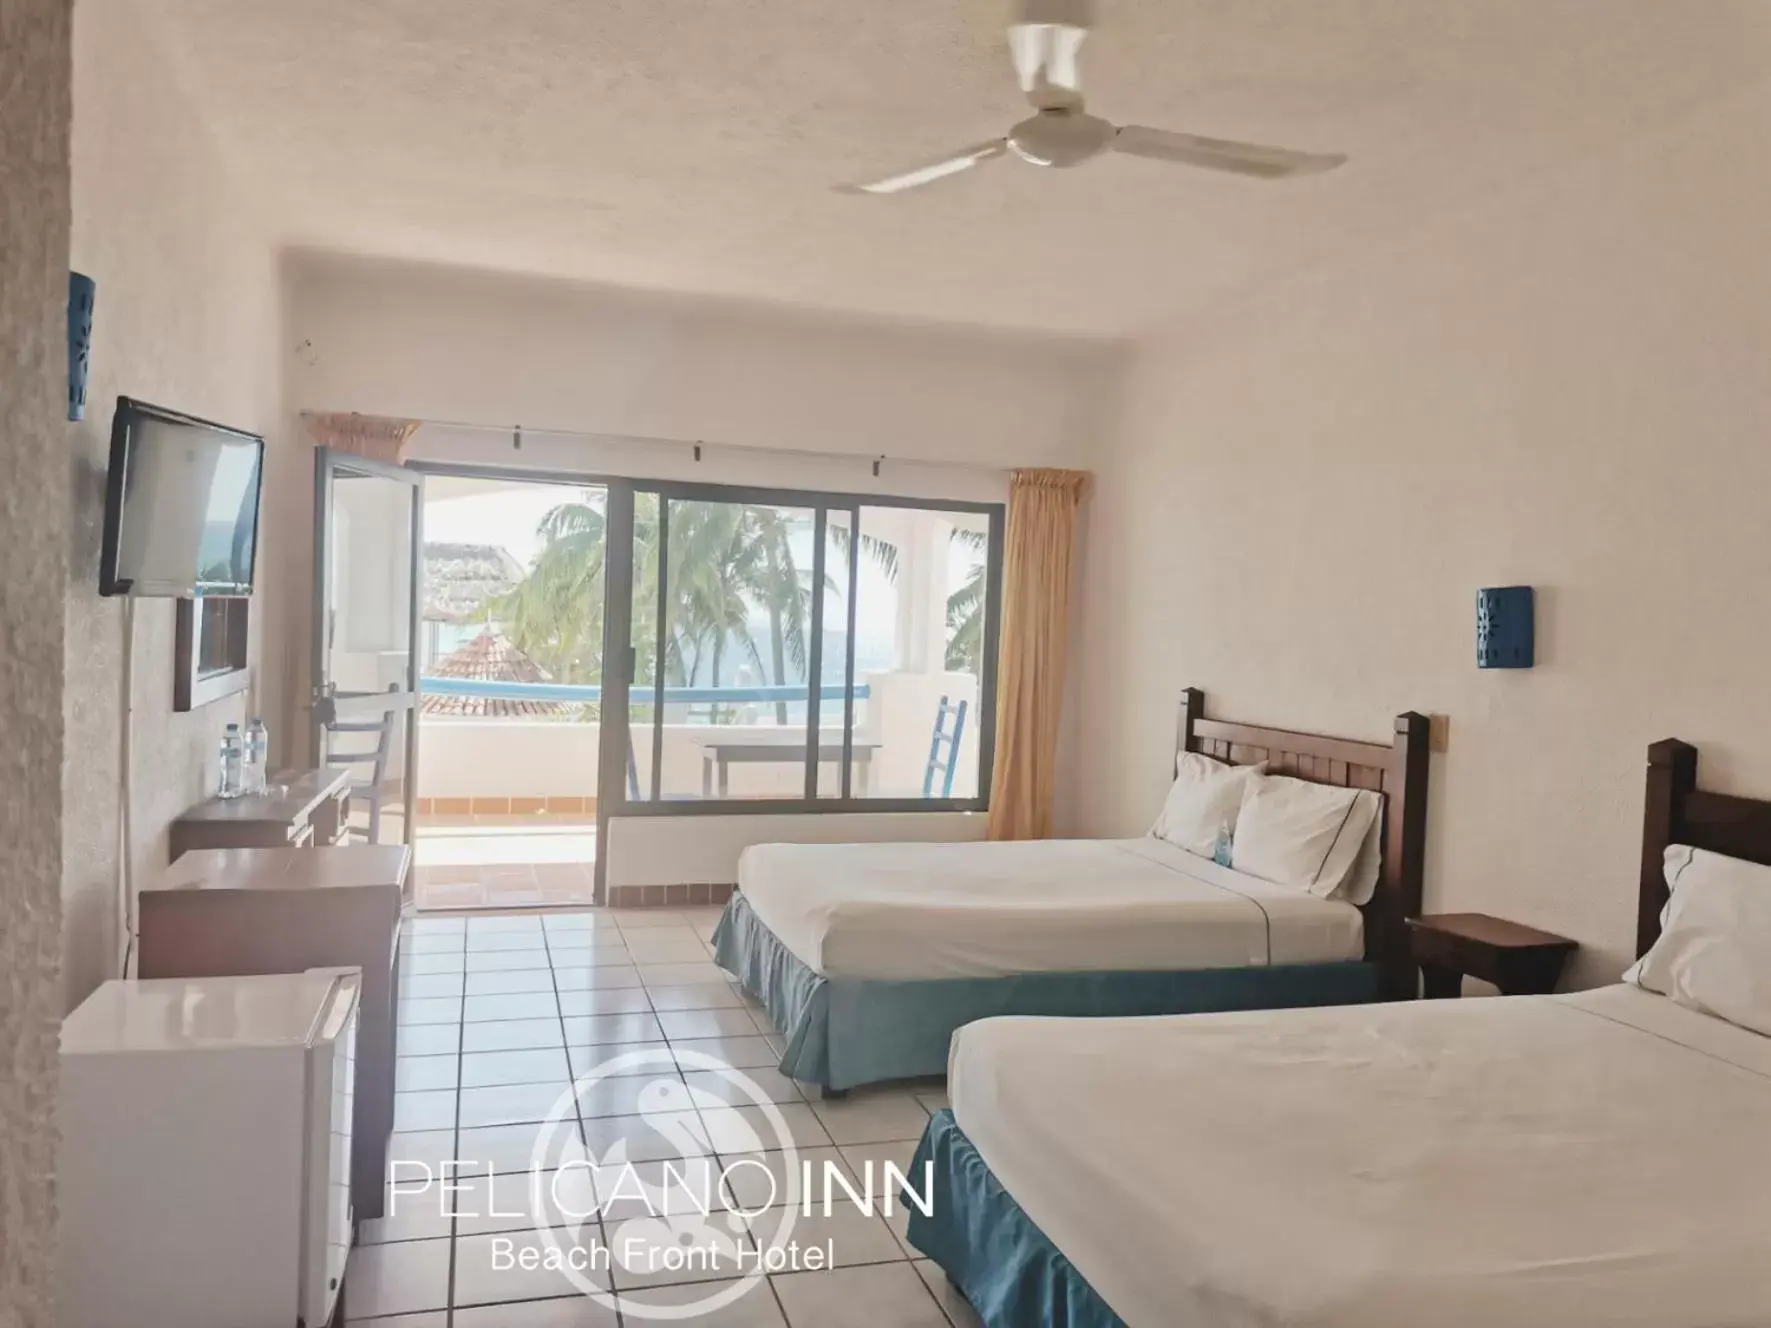 Photo of the whole room in Pelicano Inn Playa del Carmen - Beachfront Hotel